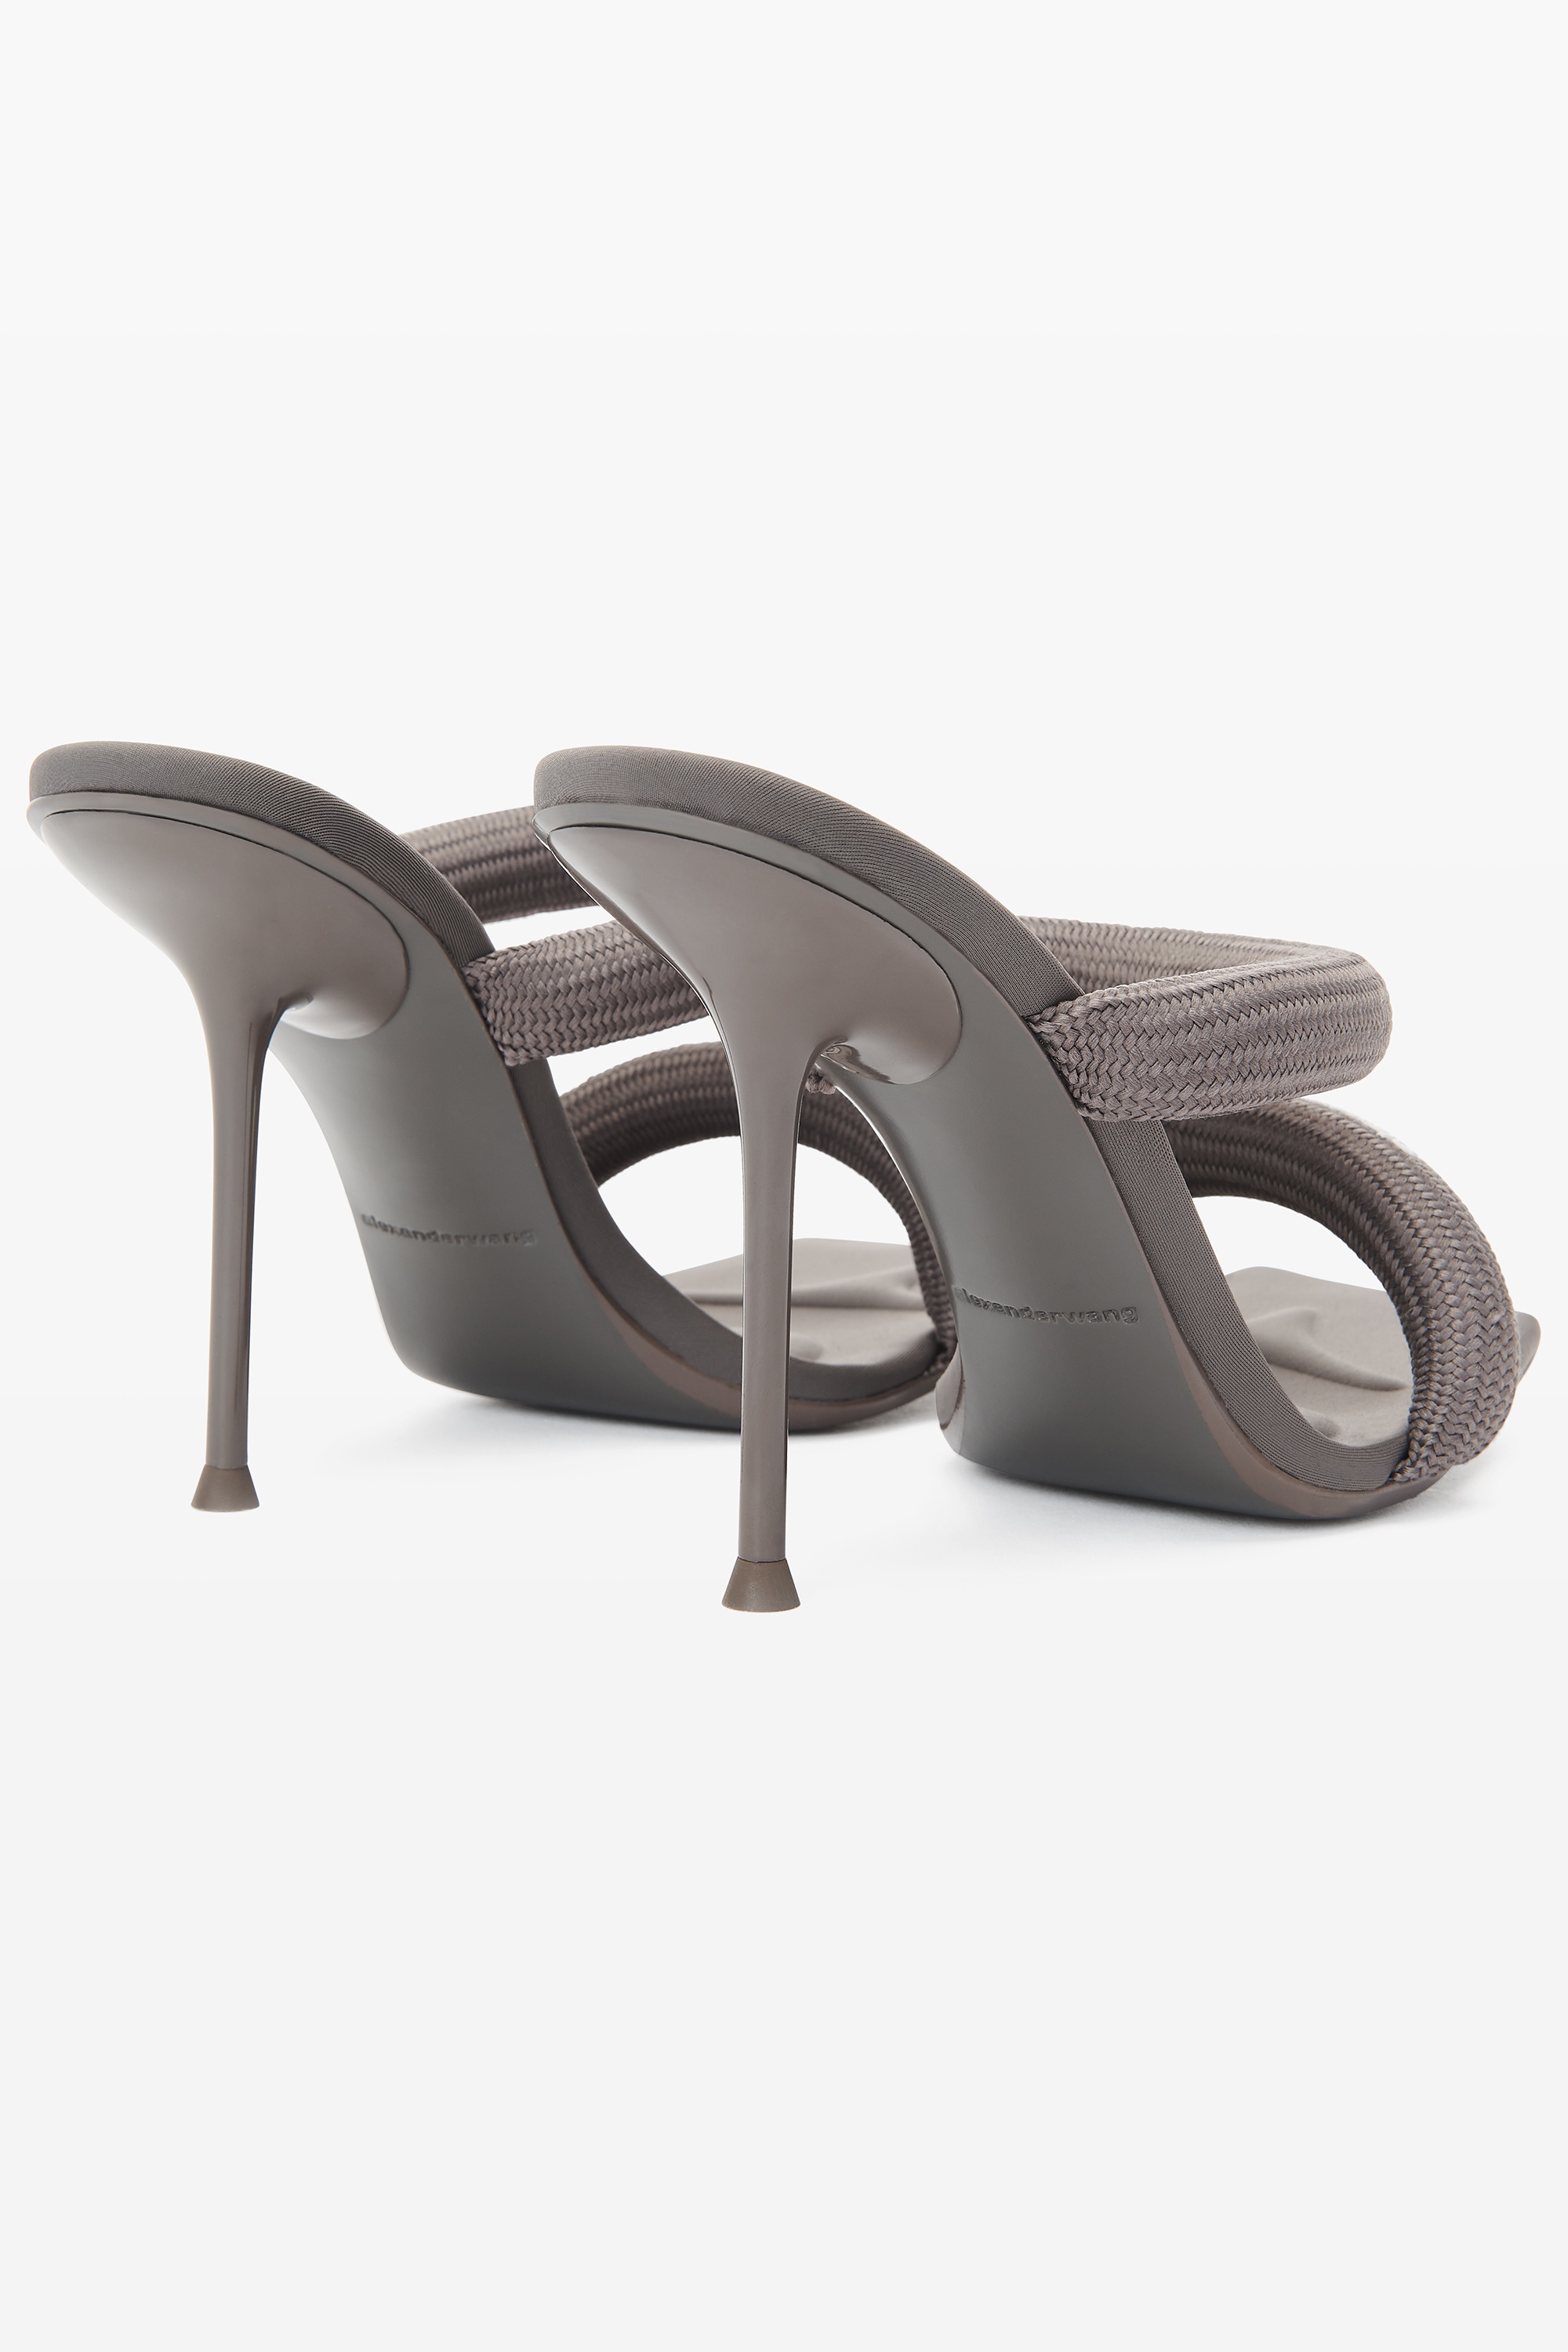 Gray Julie Tubular Sandal by Alexander Wang on Sale